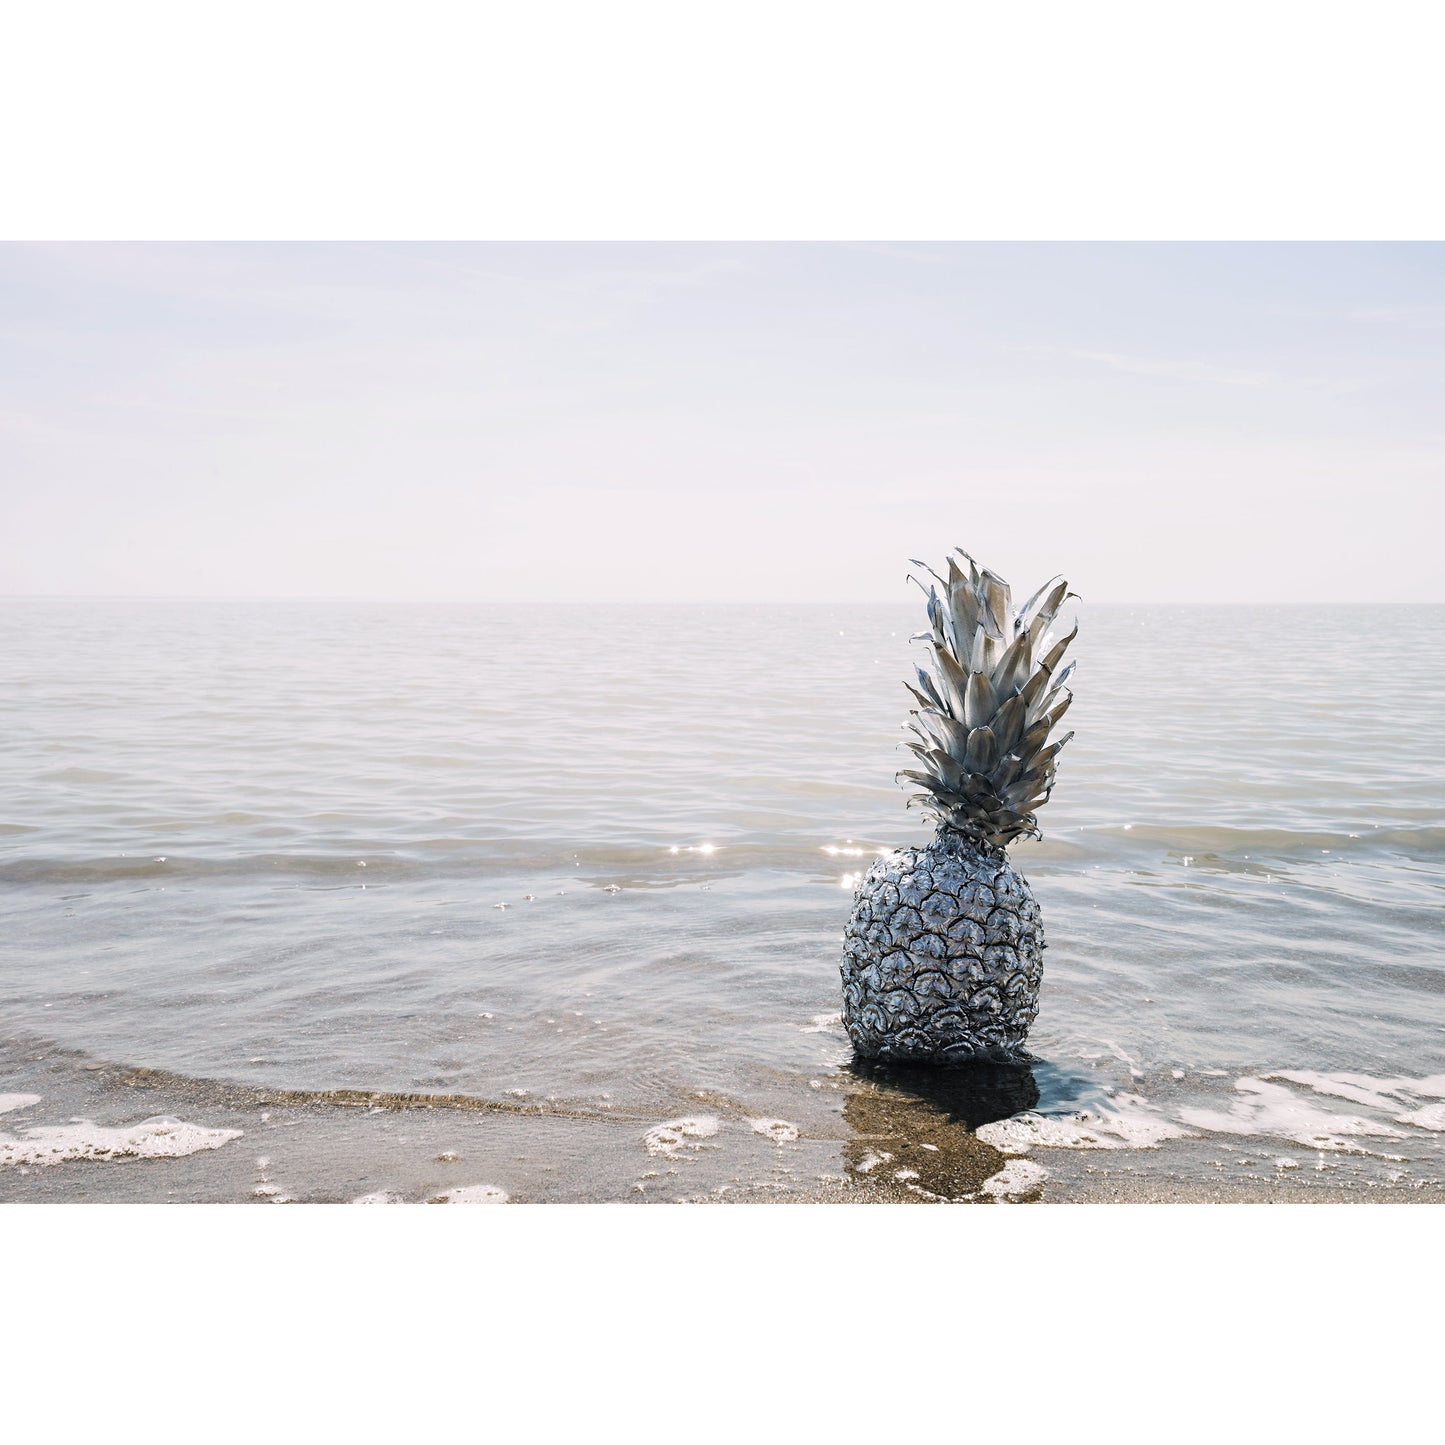 Spritzschutz - Waves Pineapple